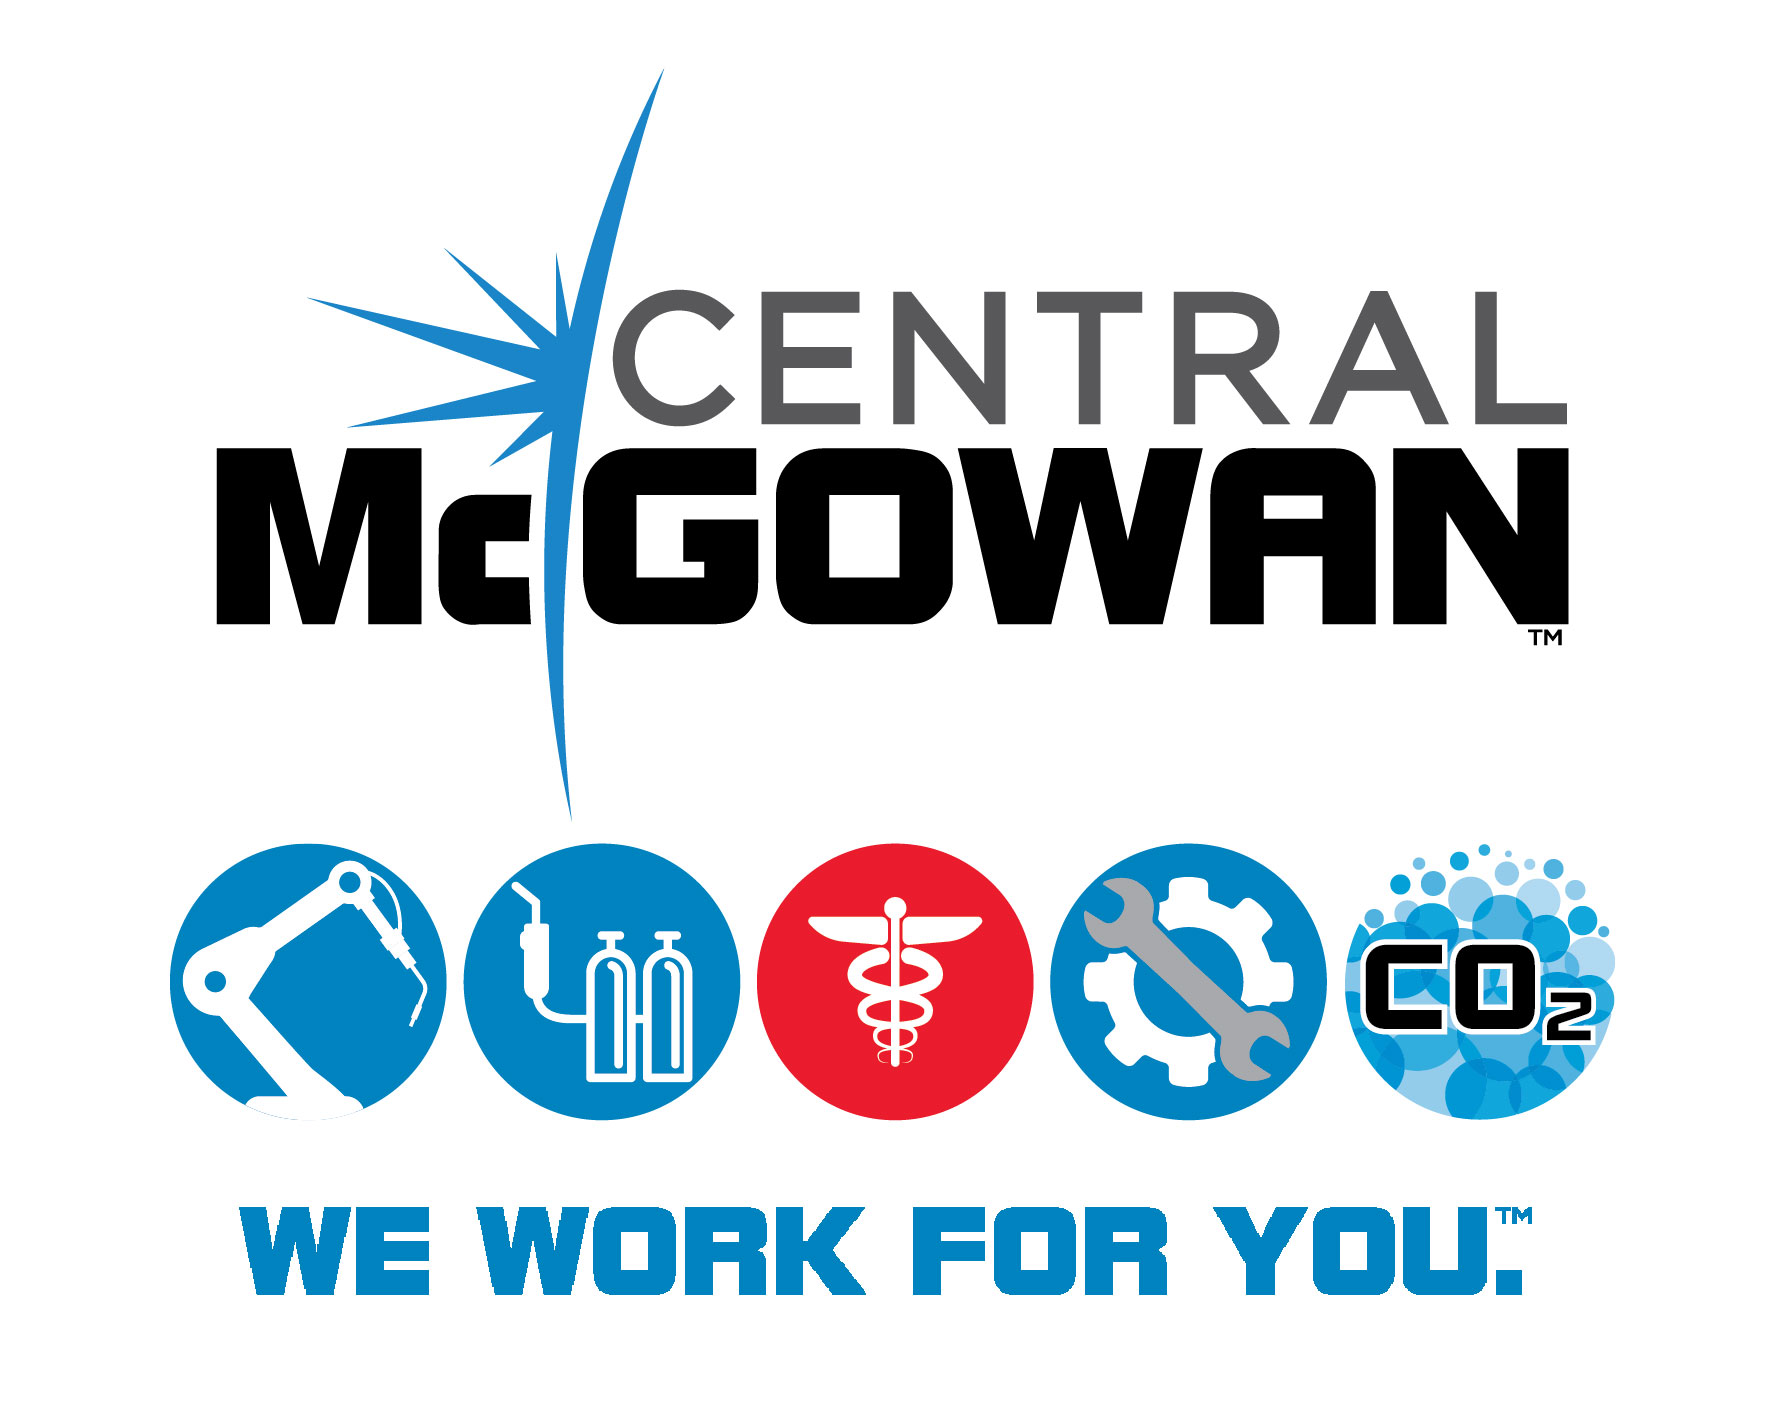 Central McGowan